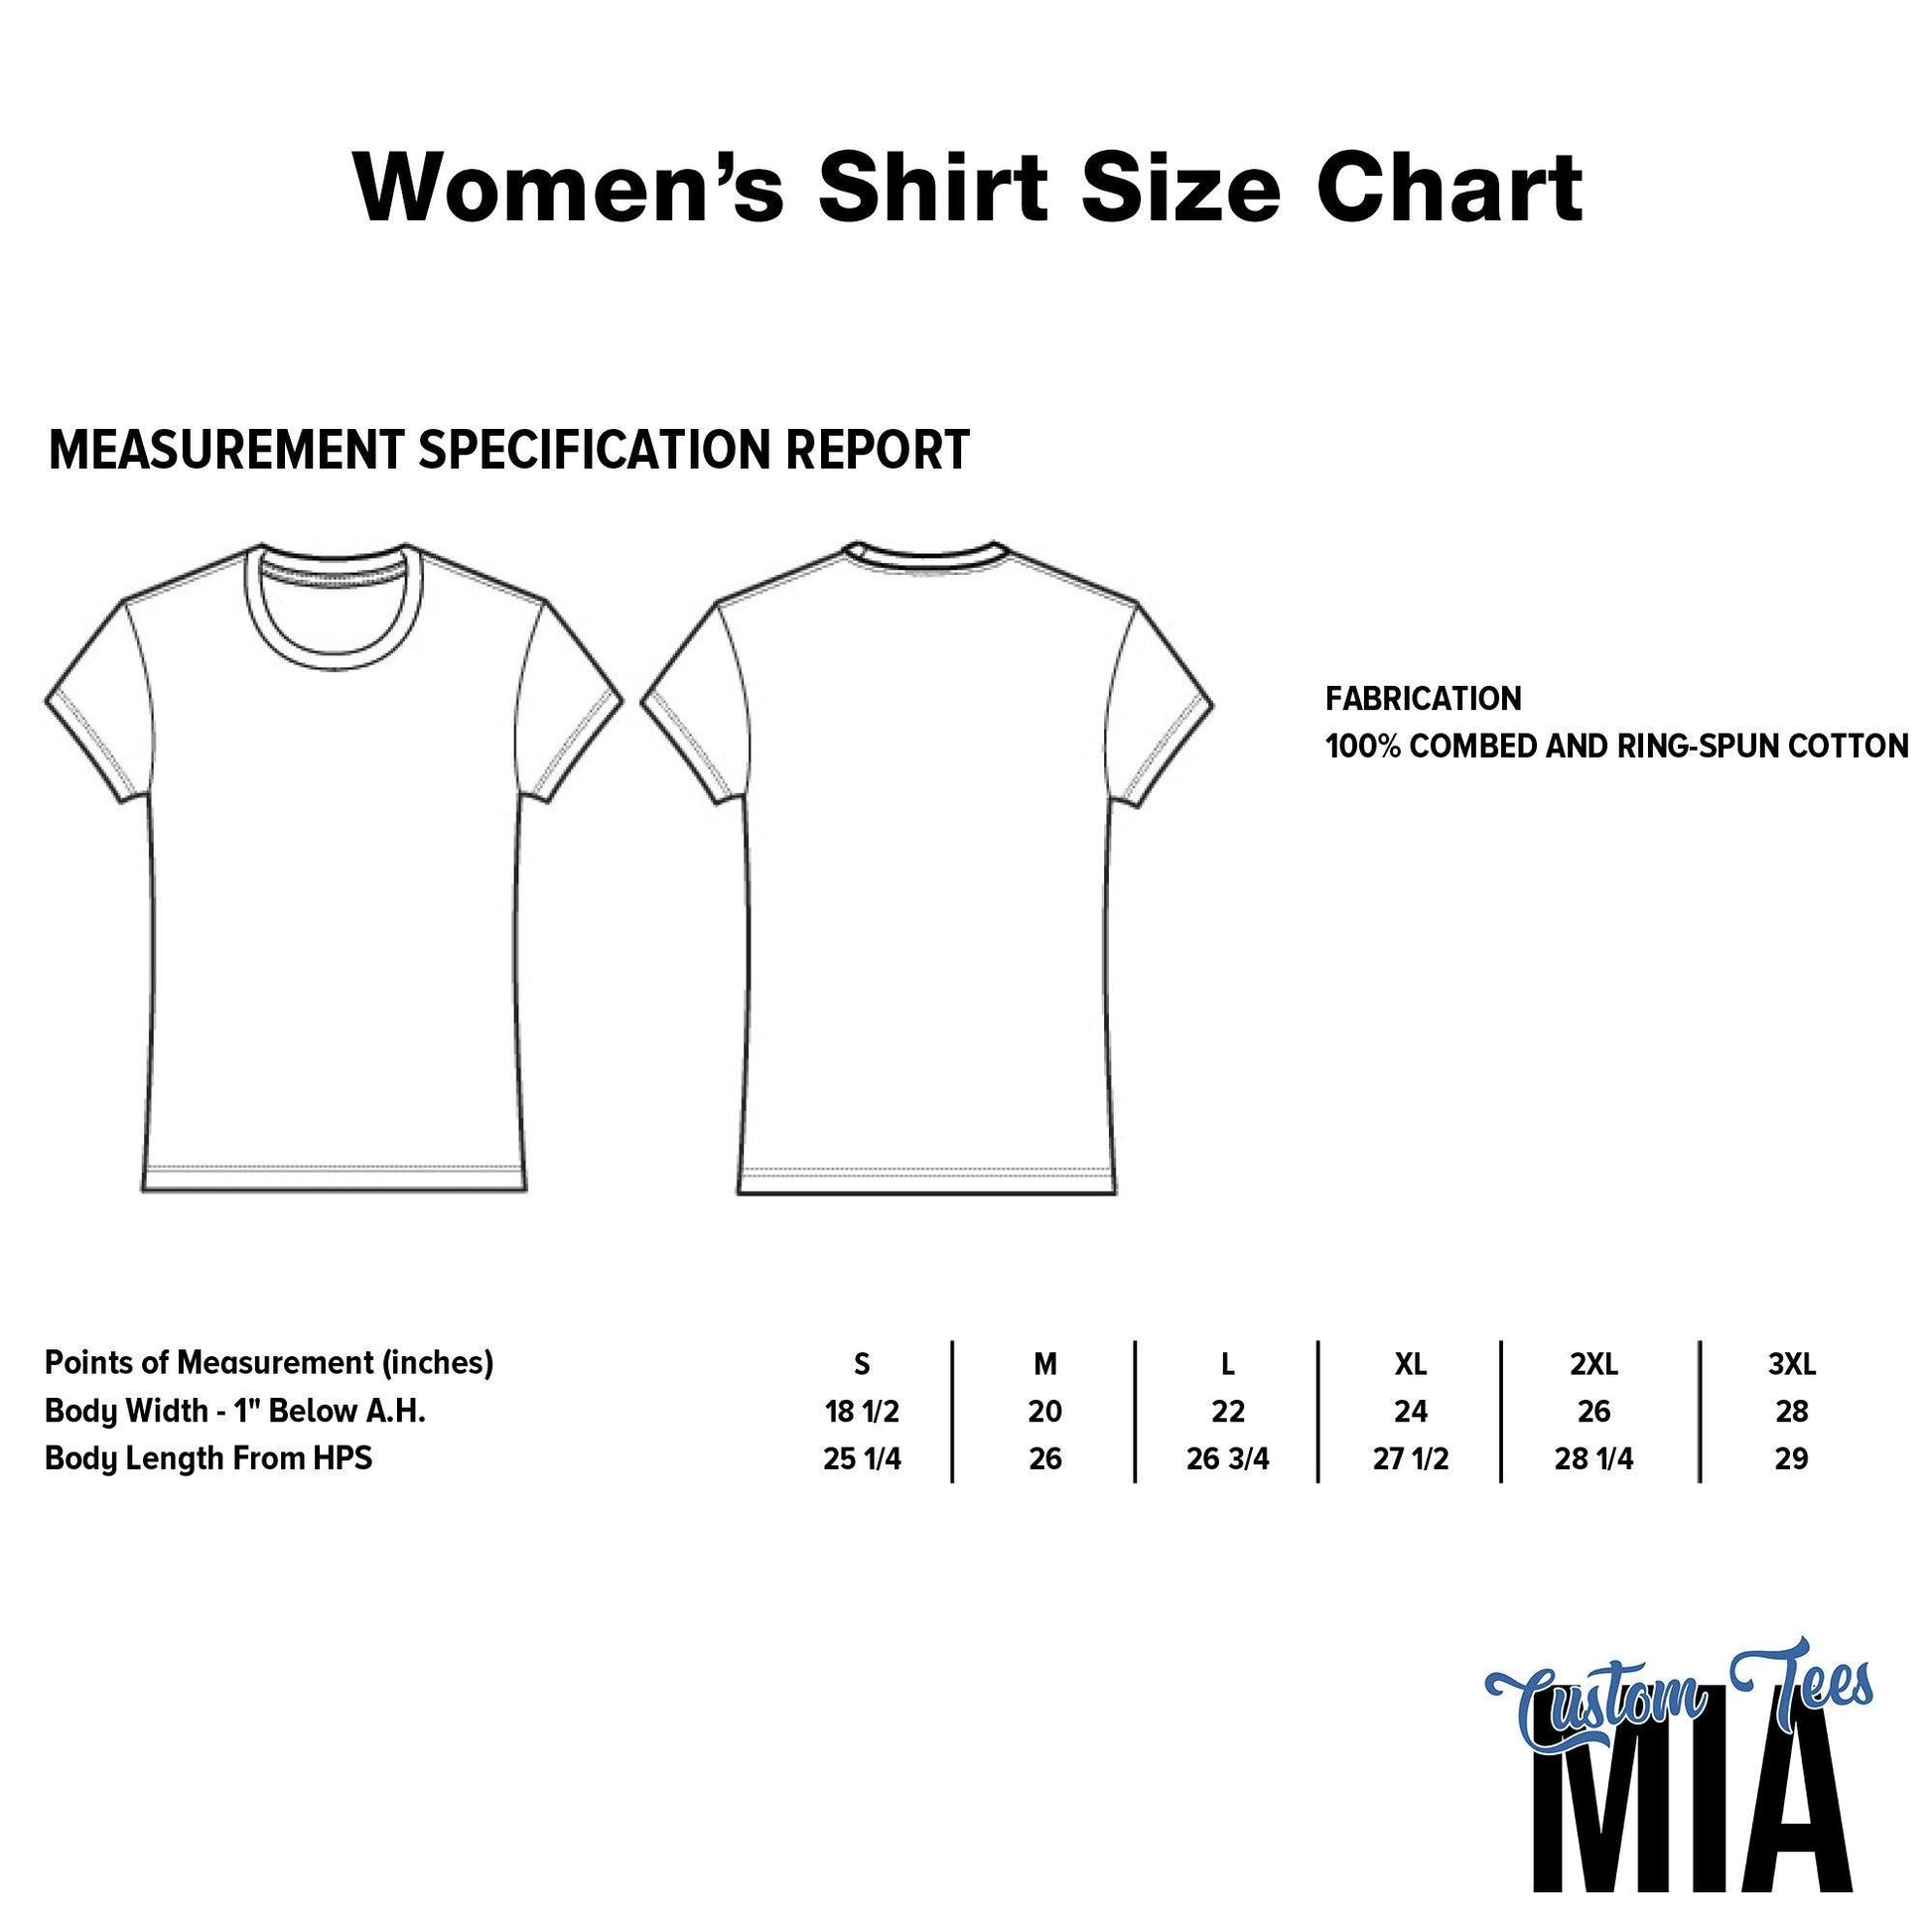 Pregnancy Announcement Grandma Shirt - Custom Tees MIA